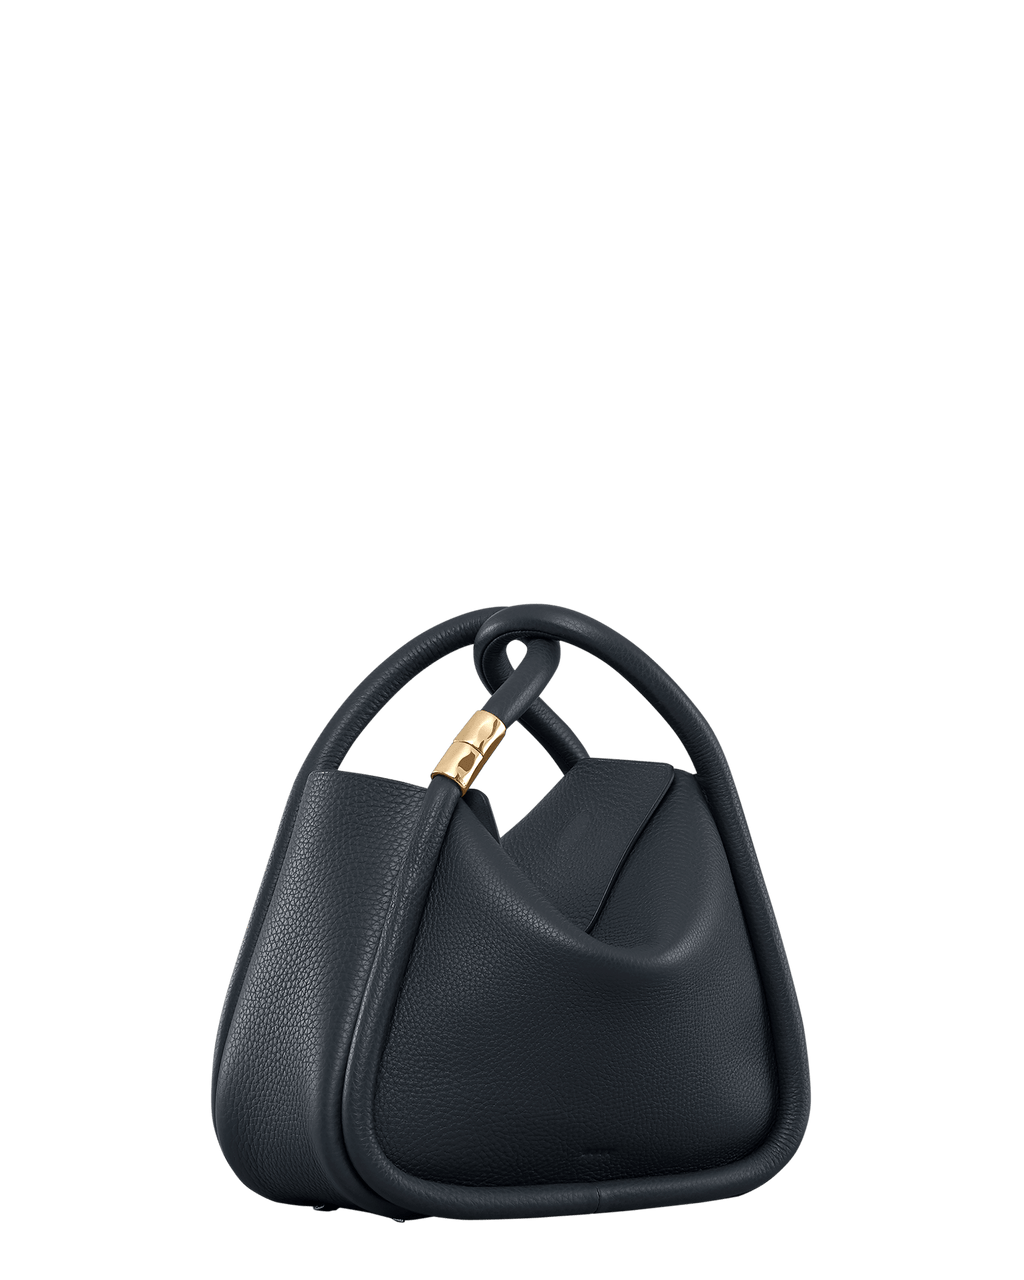 Boyy Wonton 25 Colorblocked Leather Shoulder Bag - Partridge